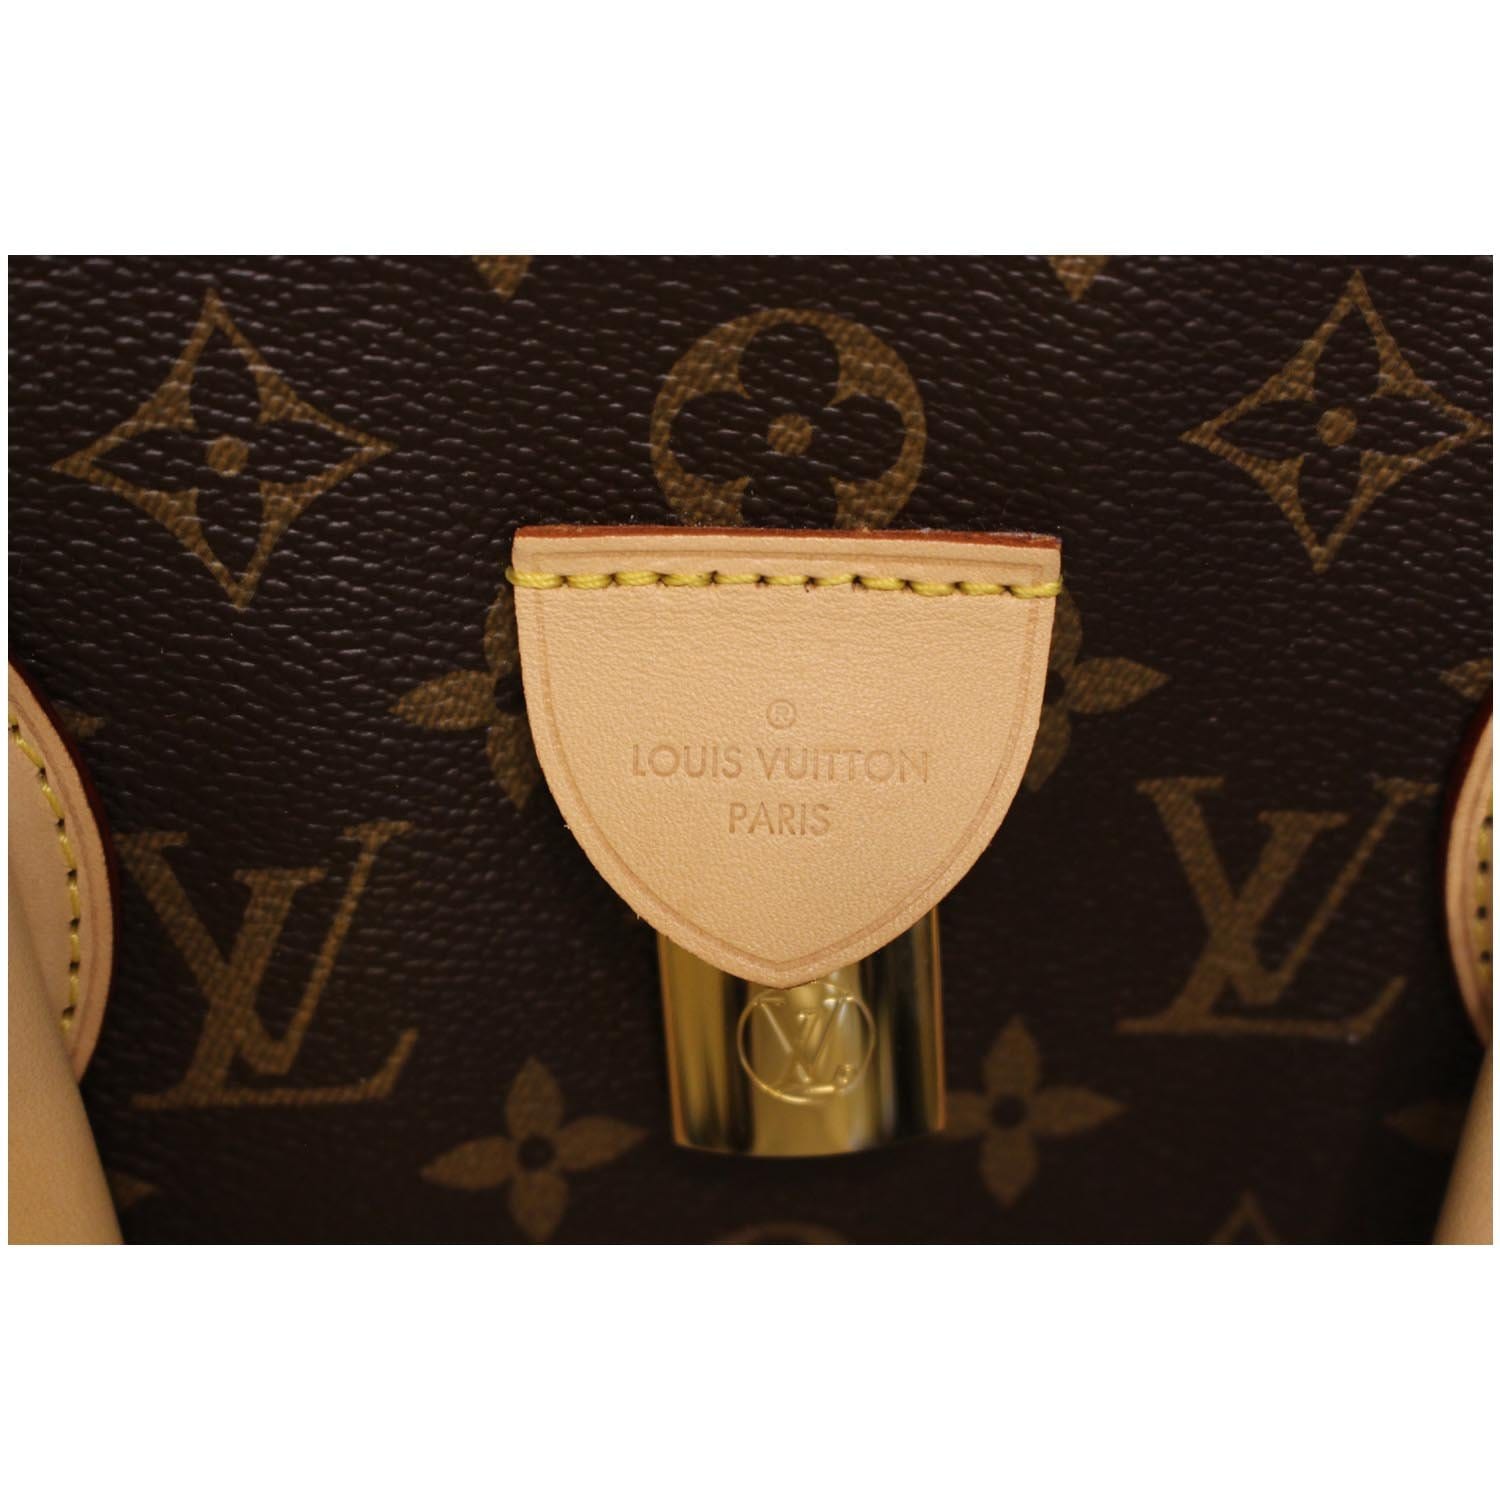 The Louis Vuitton Rivoli MM. it's a good one! I love the versatility o